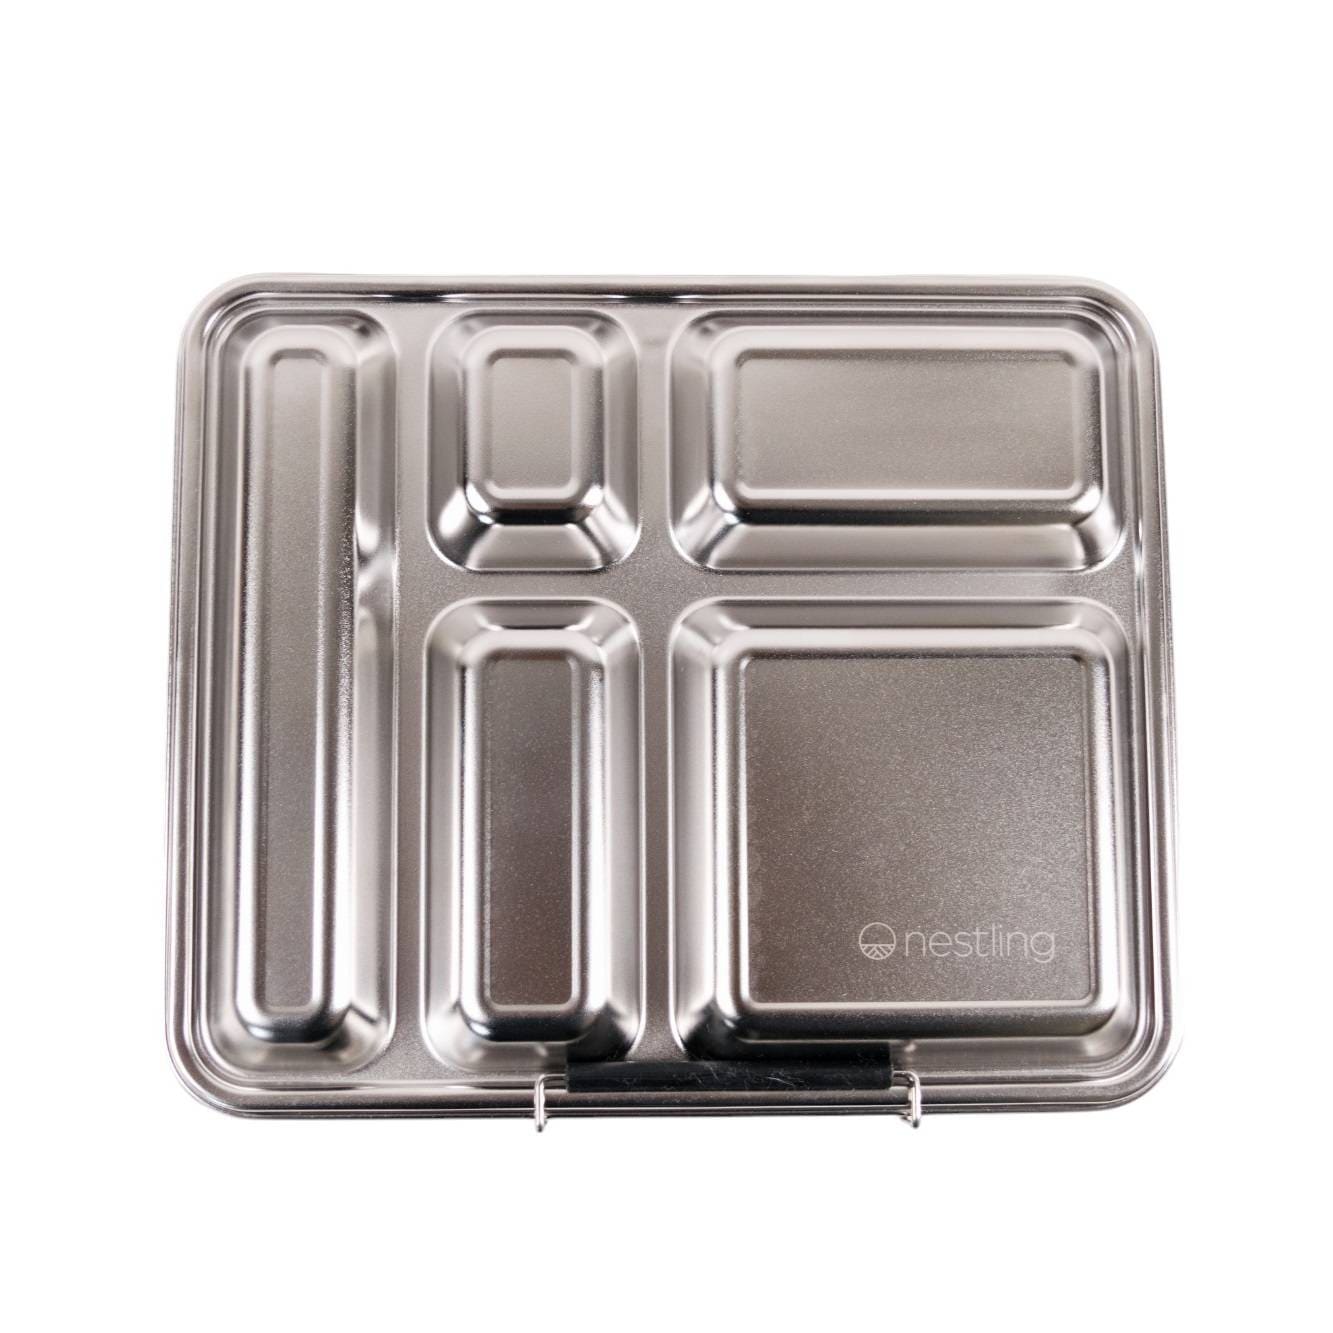 Nestling Accessory Feeding Nestling Stainless Steel Jumbo Bento Box